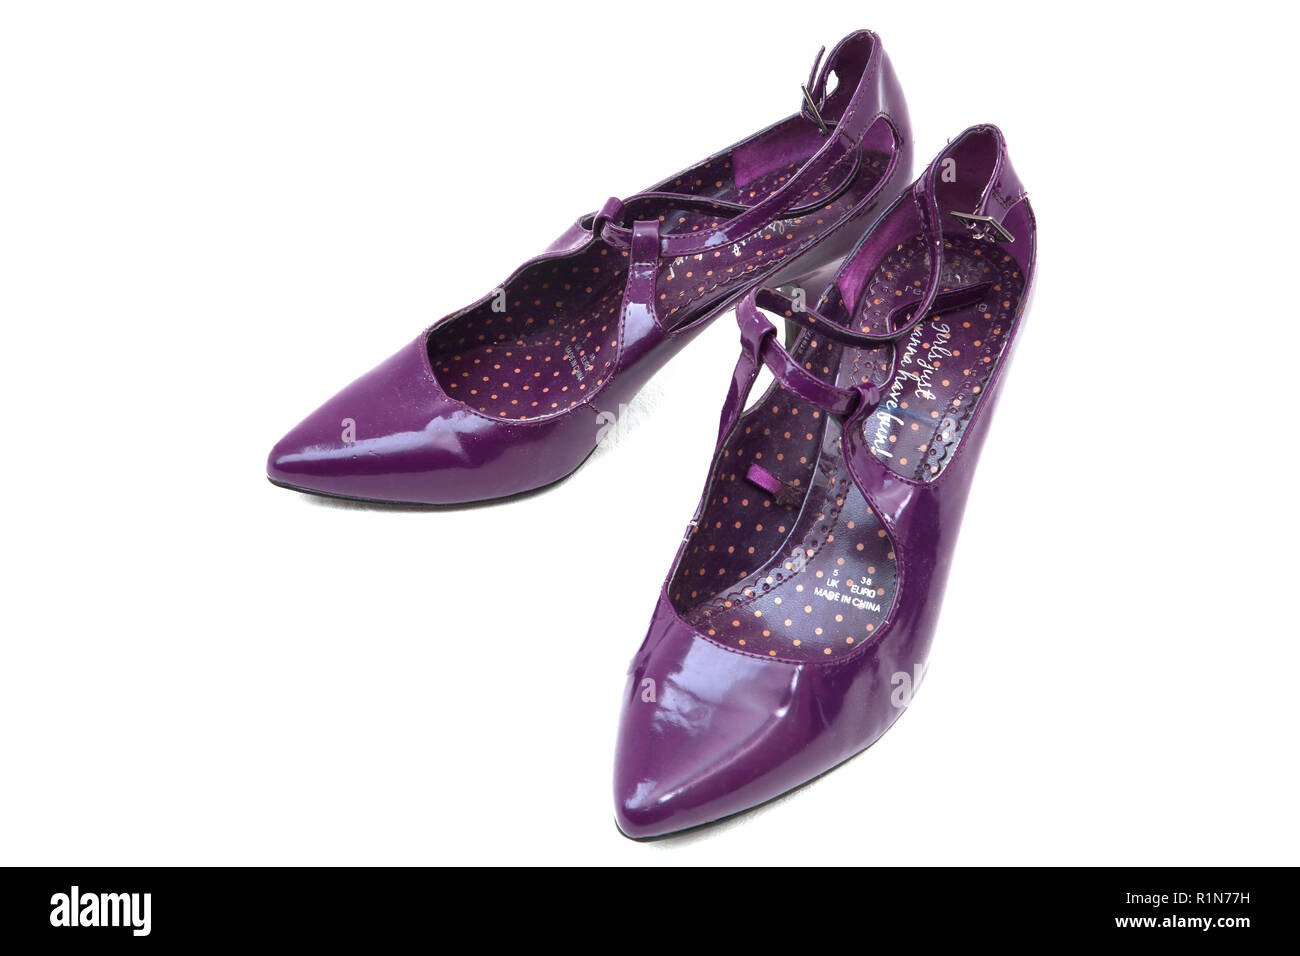 Arenque rojo púrpura plástico patentes zapatos de tacón Foto de stock